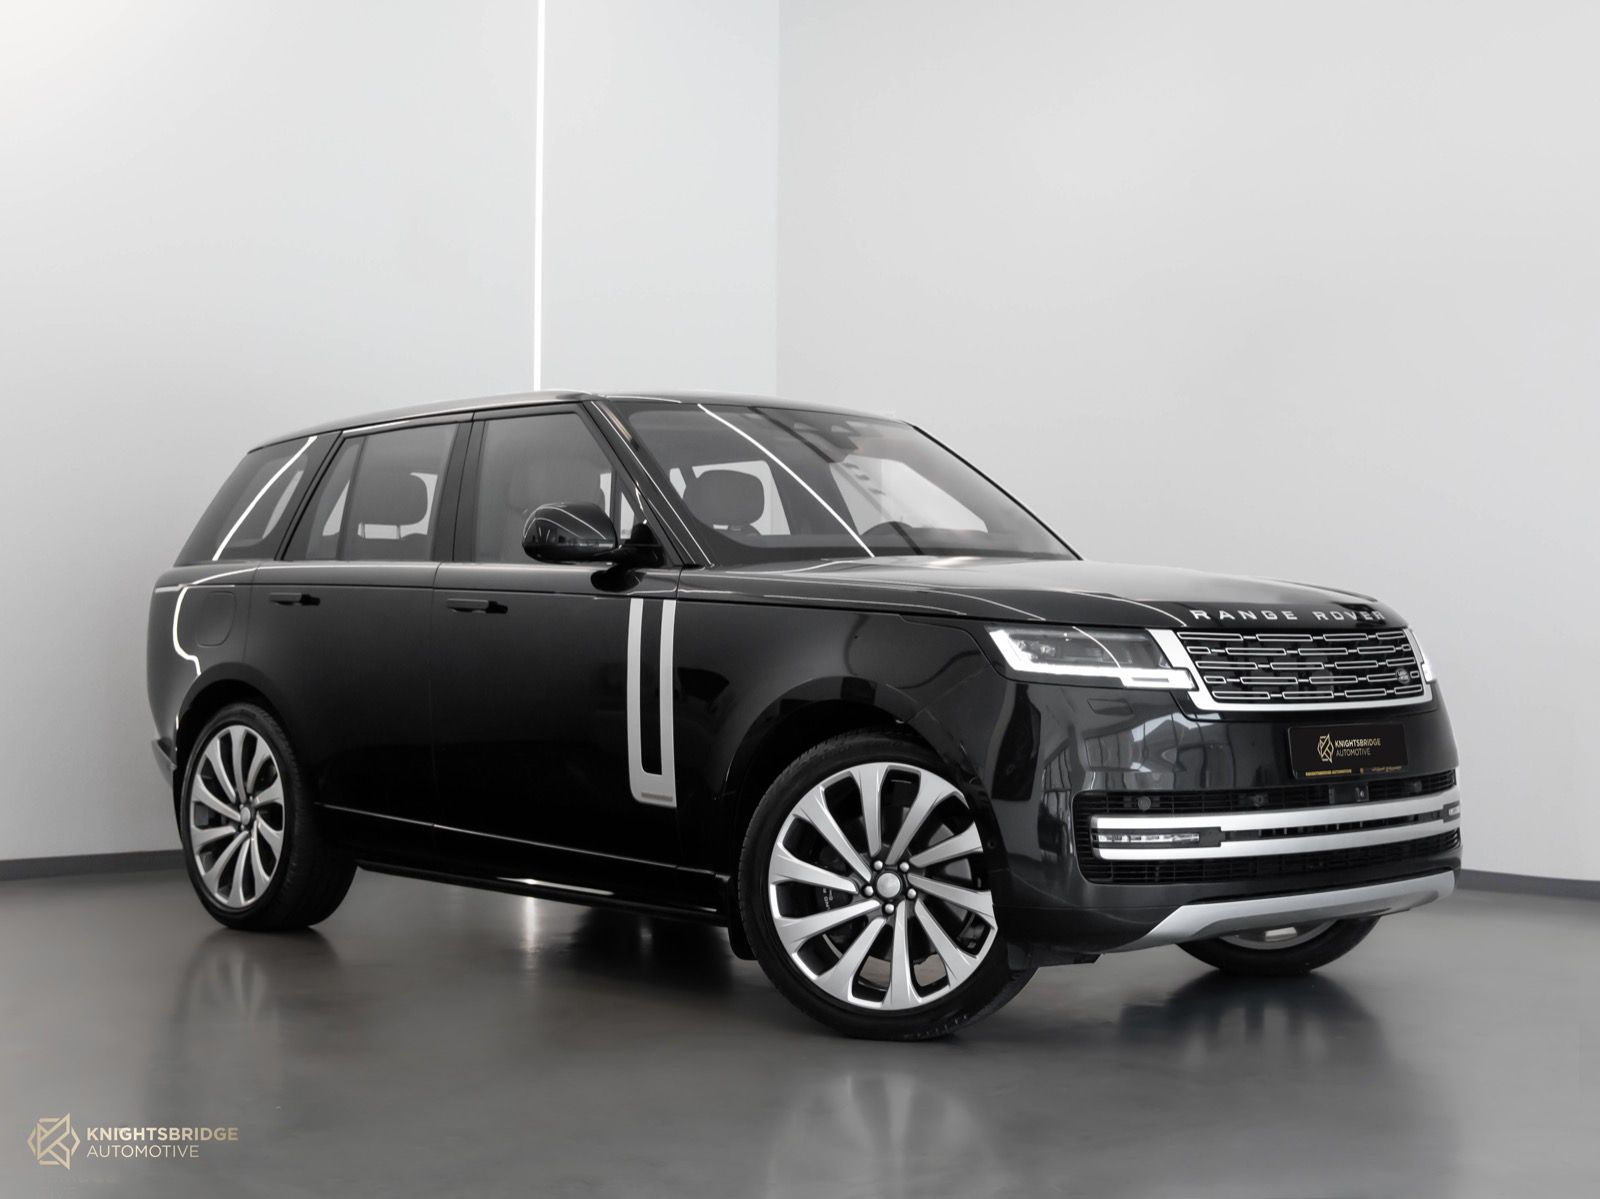 2022 Range Rover Vogue Autobiography at Knightsbridge Automotive - (10703 - 1)